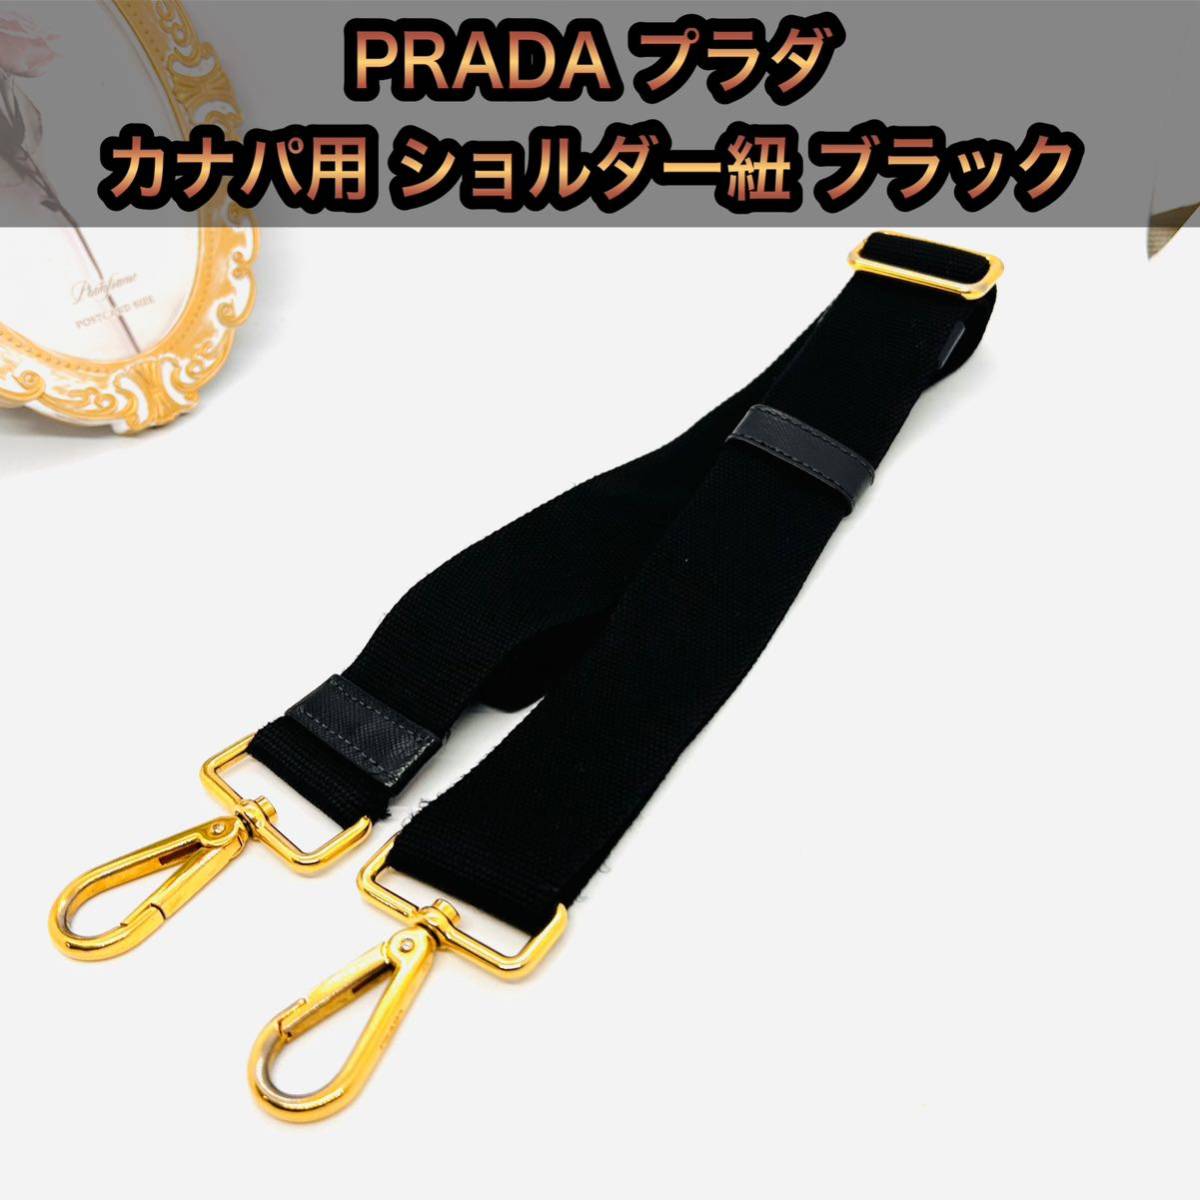 PRADA プラダ ショルダー紐 カナパ用 レディース 交換用 単品 ベルト バッグ 黒 ストラップ _画像1